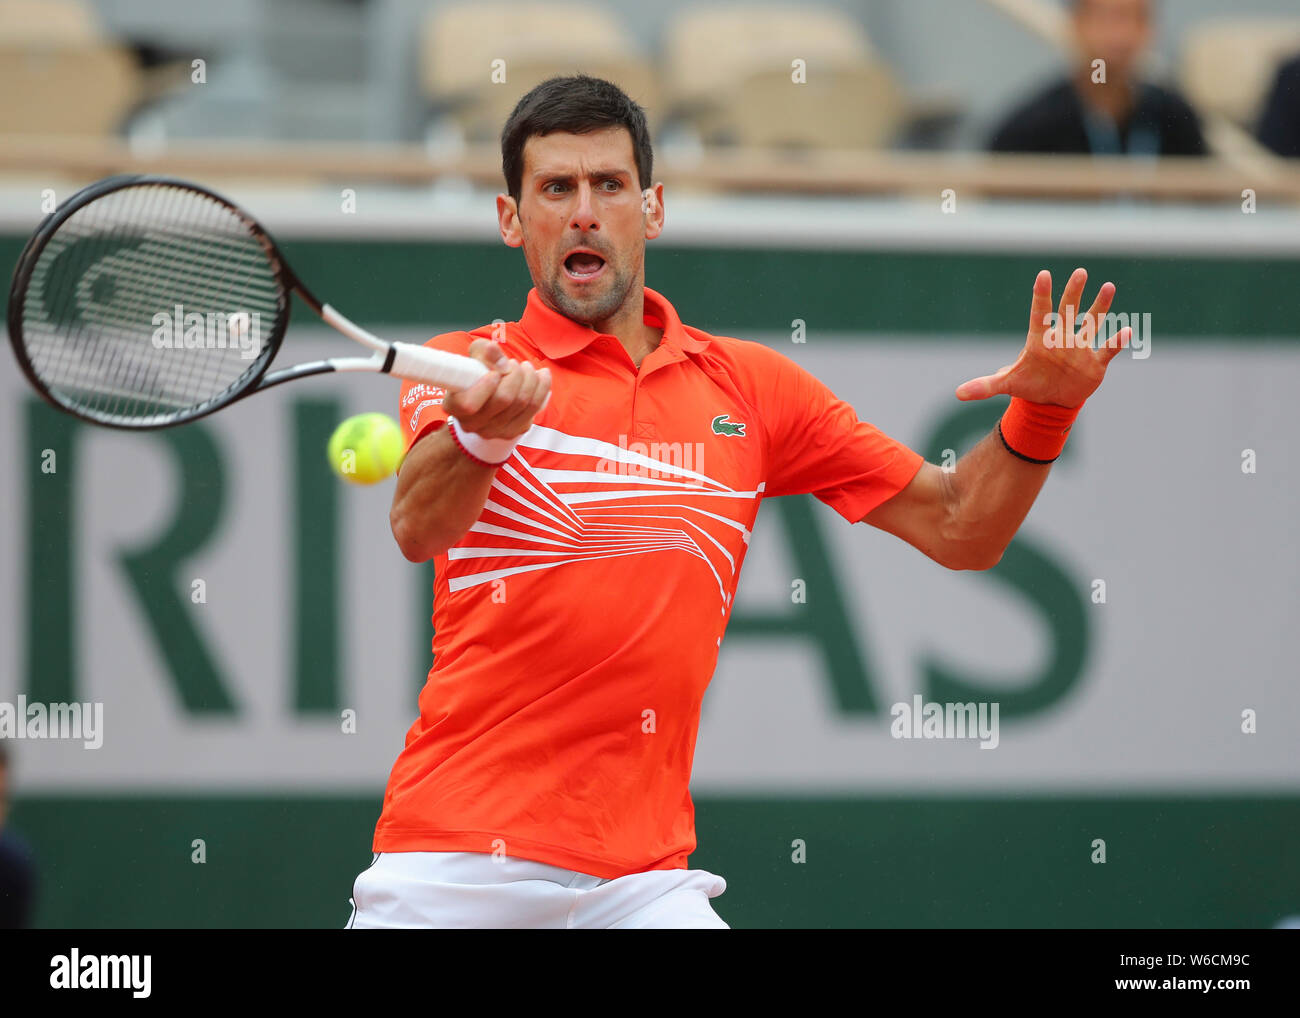 Serbian tennis player Novak Djokovic playing a forehand shot in French Open 2019  tennis tournament, Paris, France Stock Photo - Alamy